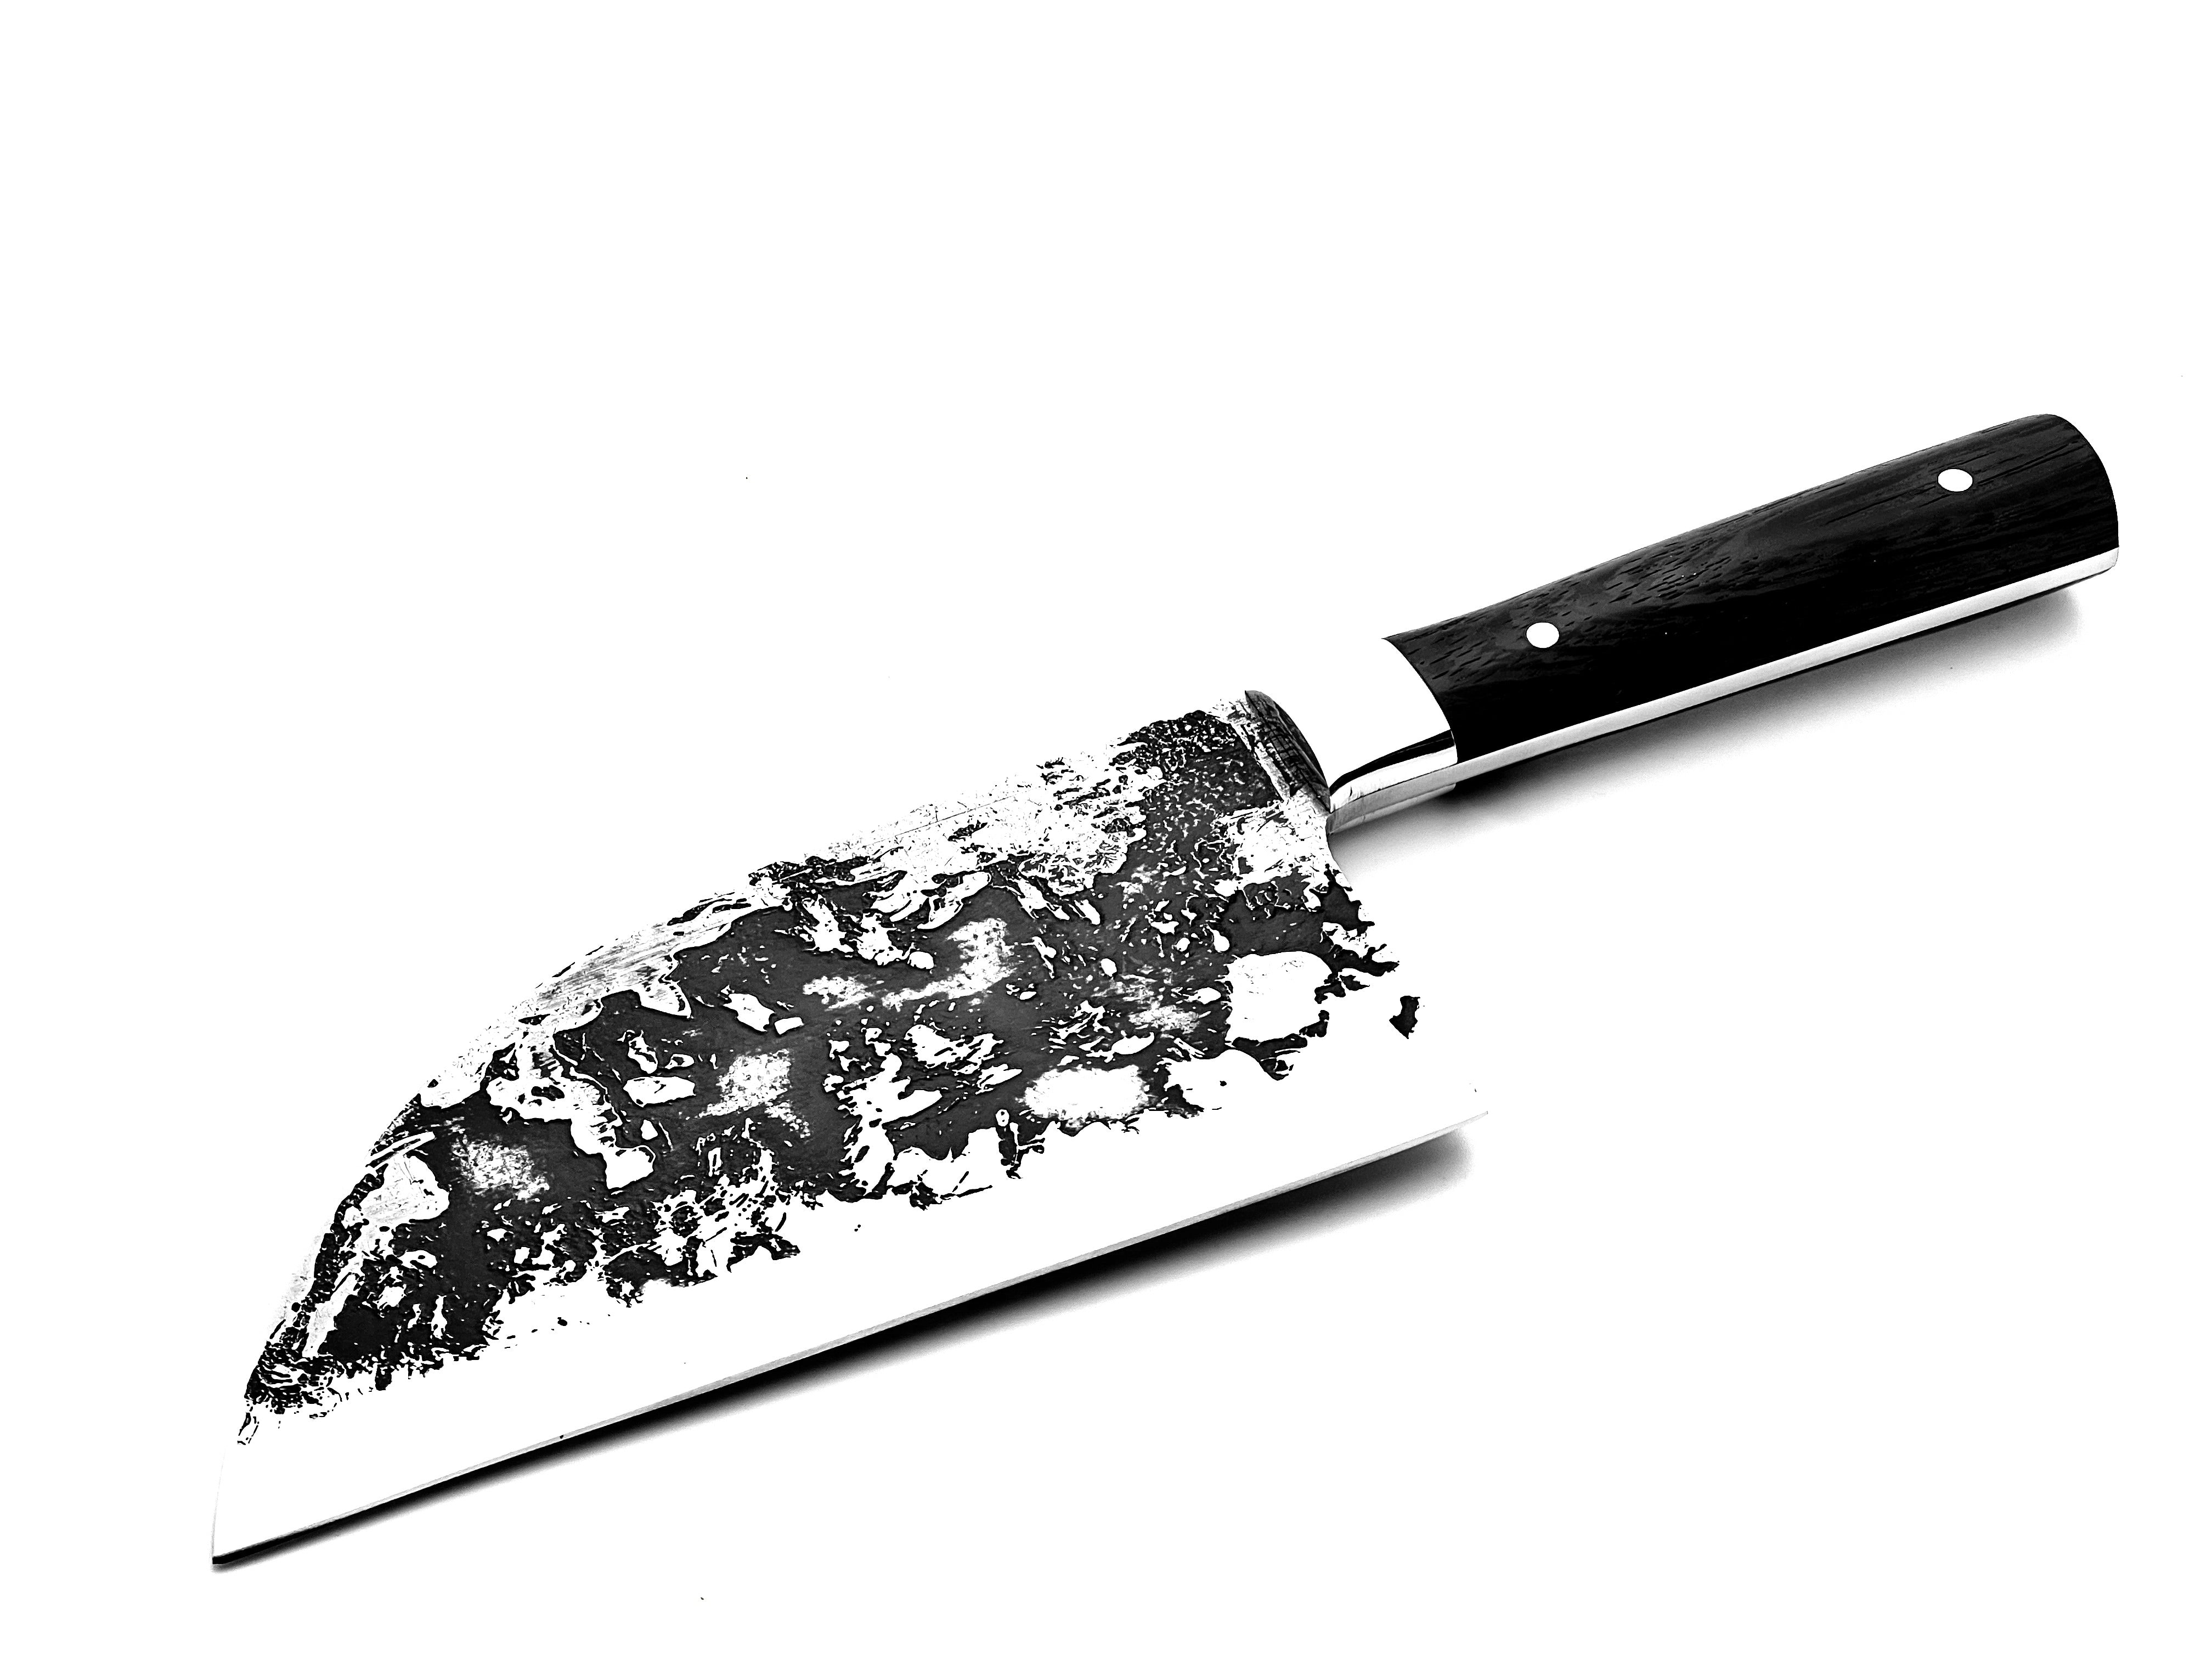 Serbian knife